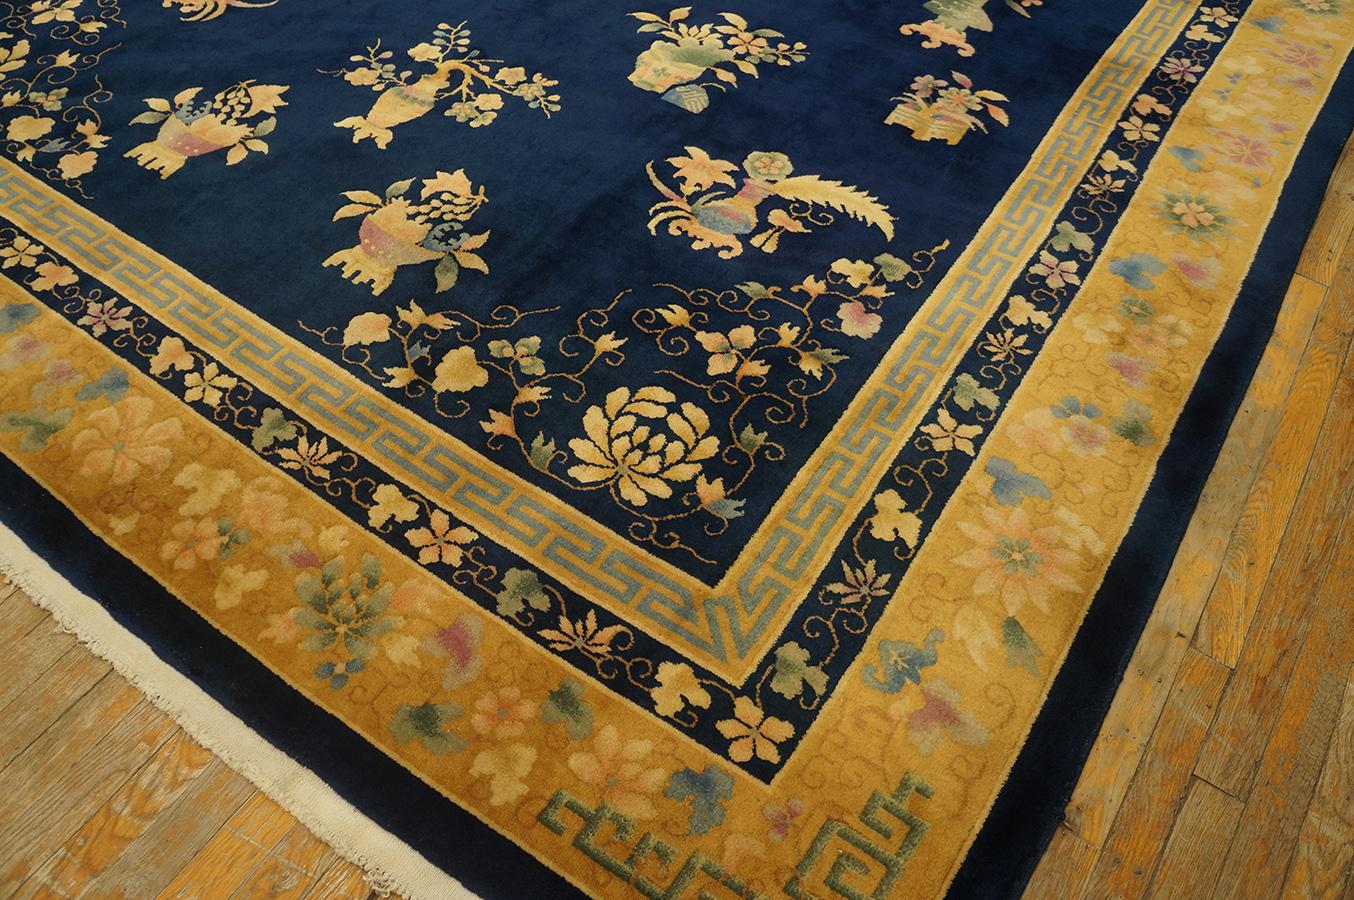 1920s Chinese Art Deco Carpet ( 8' 9'' x 11' 6'' - 266 x 350 cm ) For Sale 2